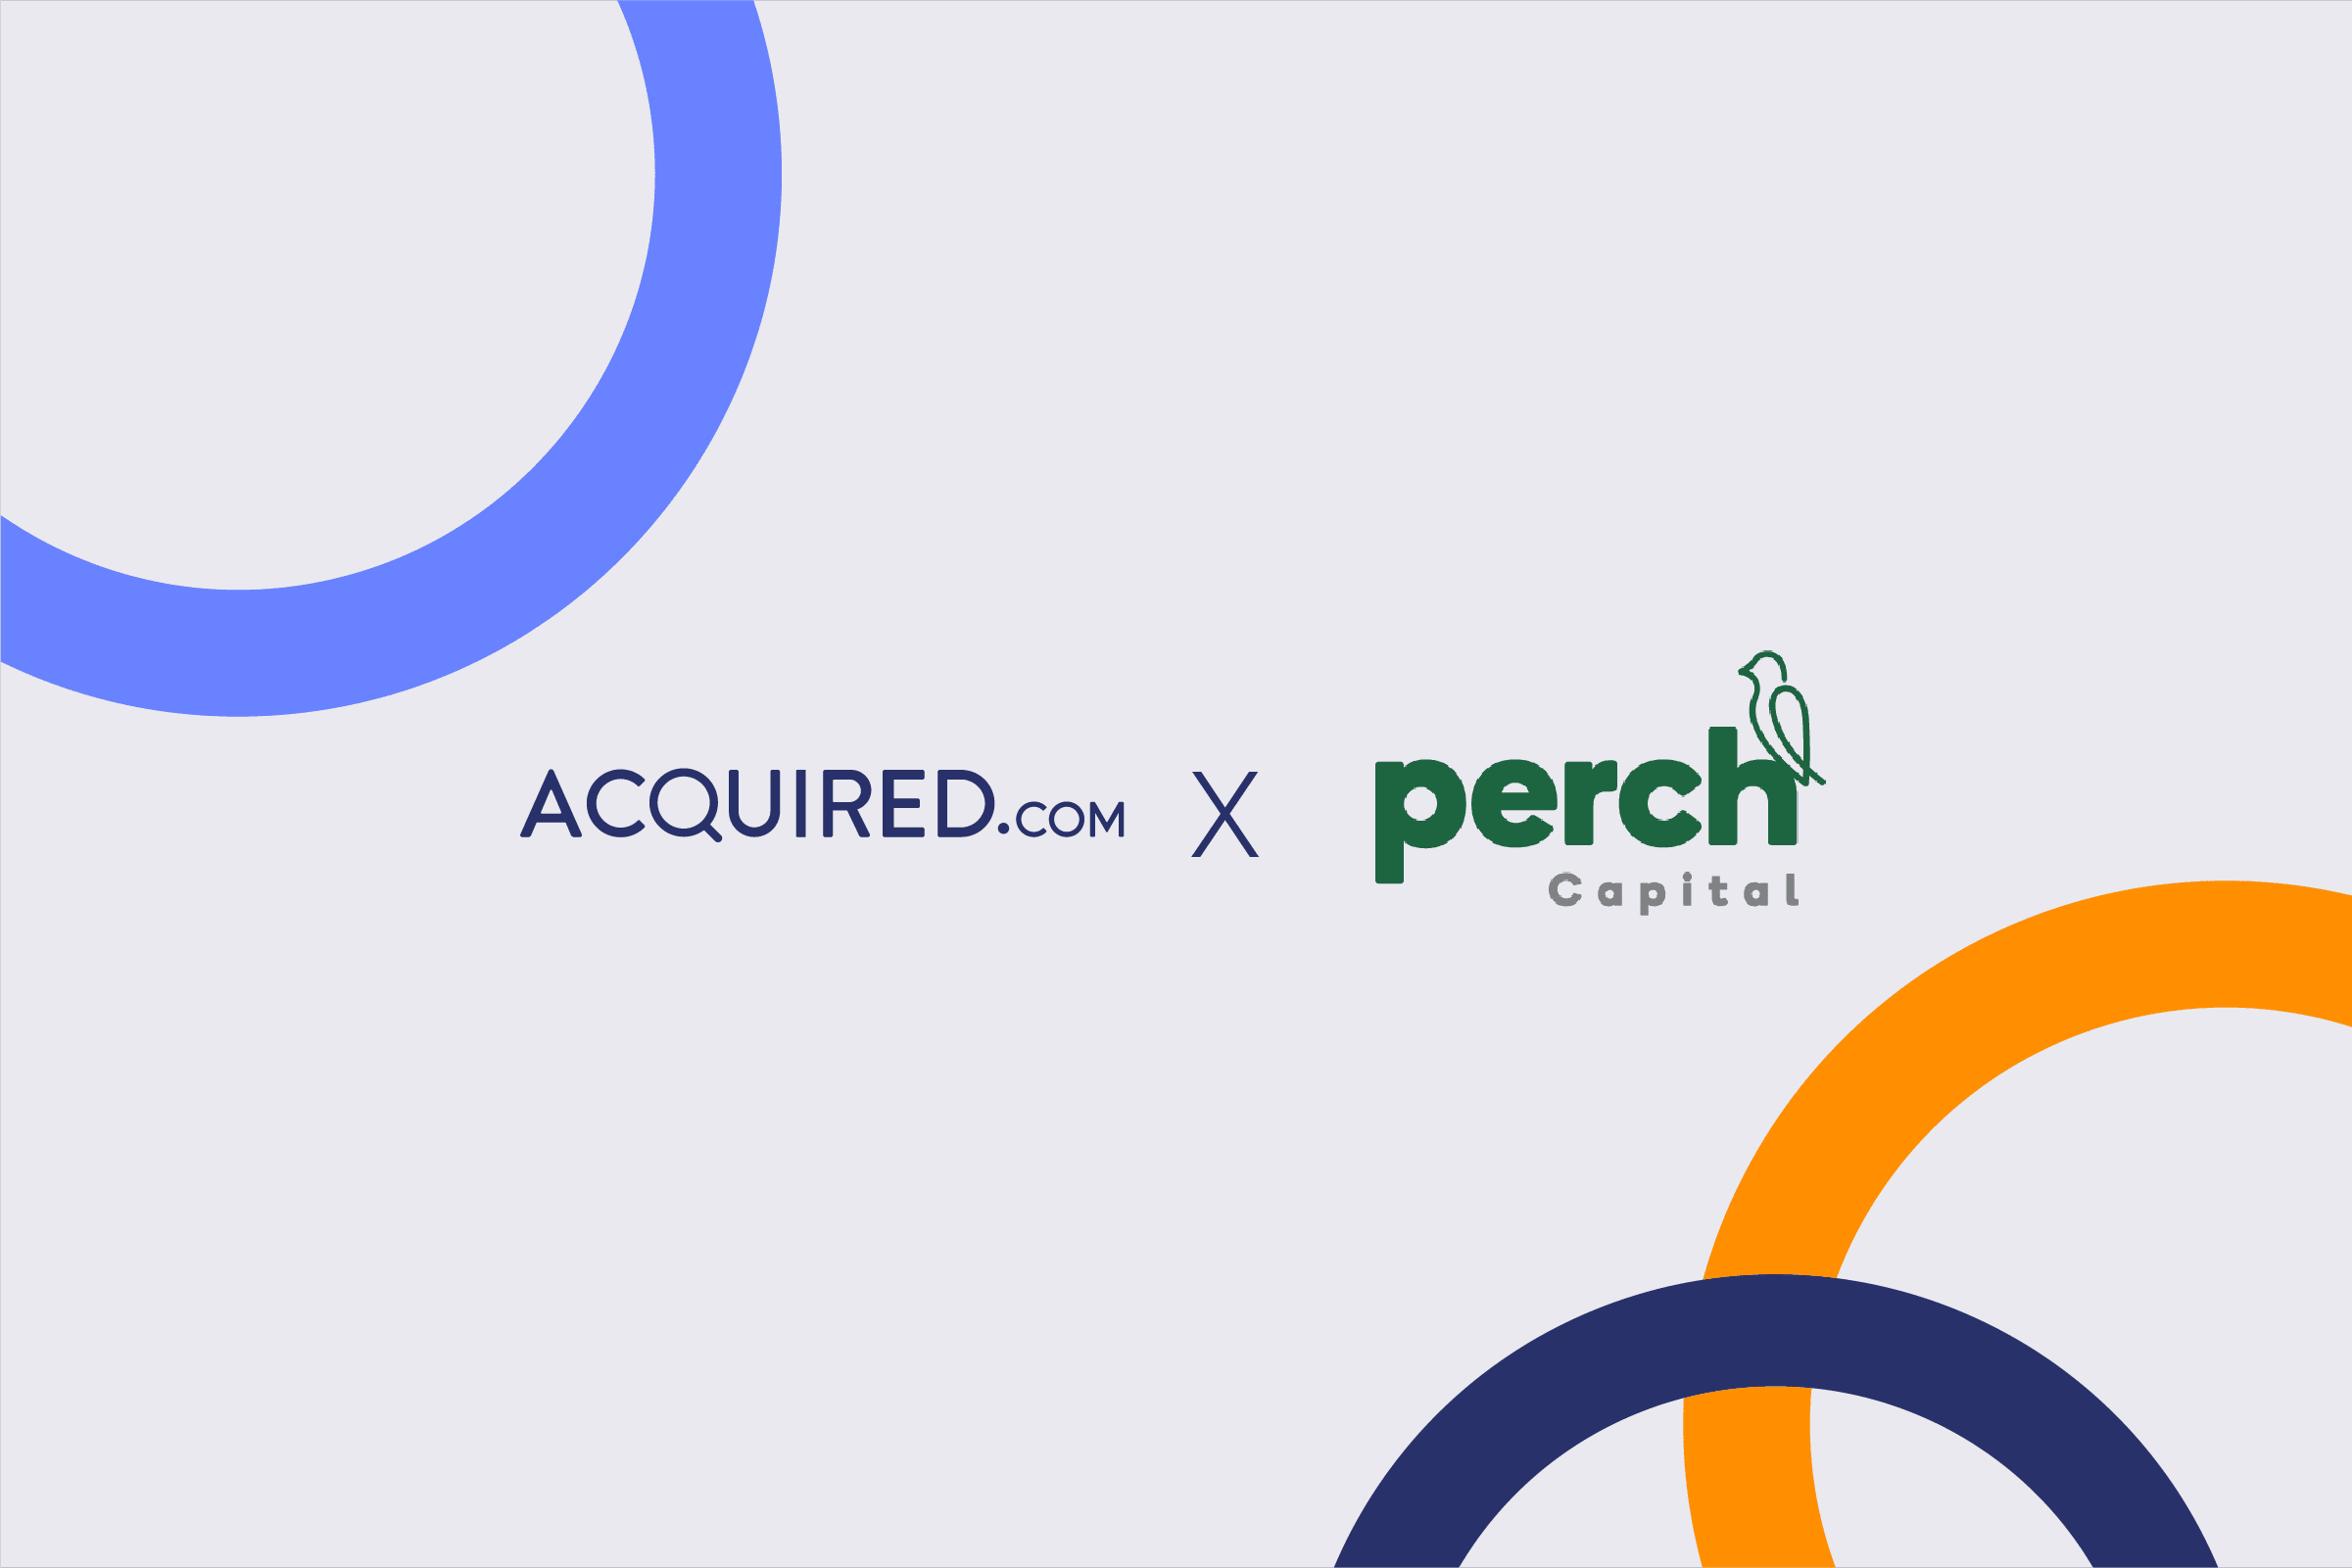 Acquired.com x perch capital